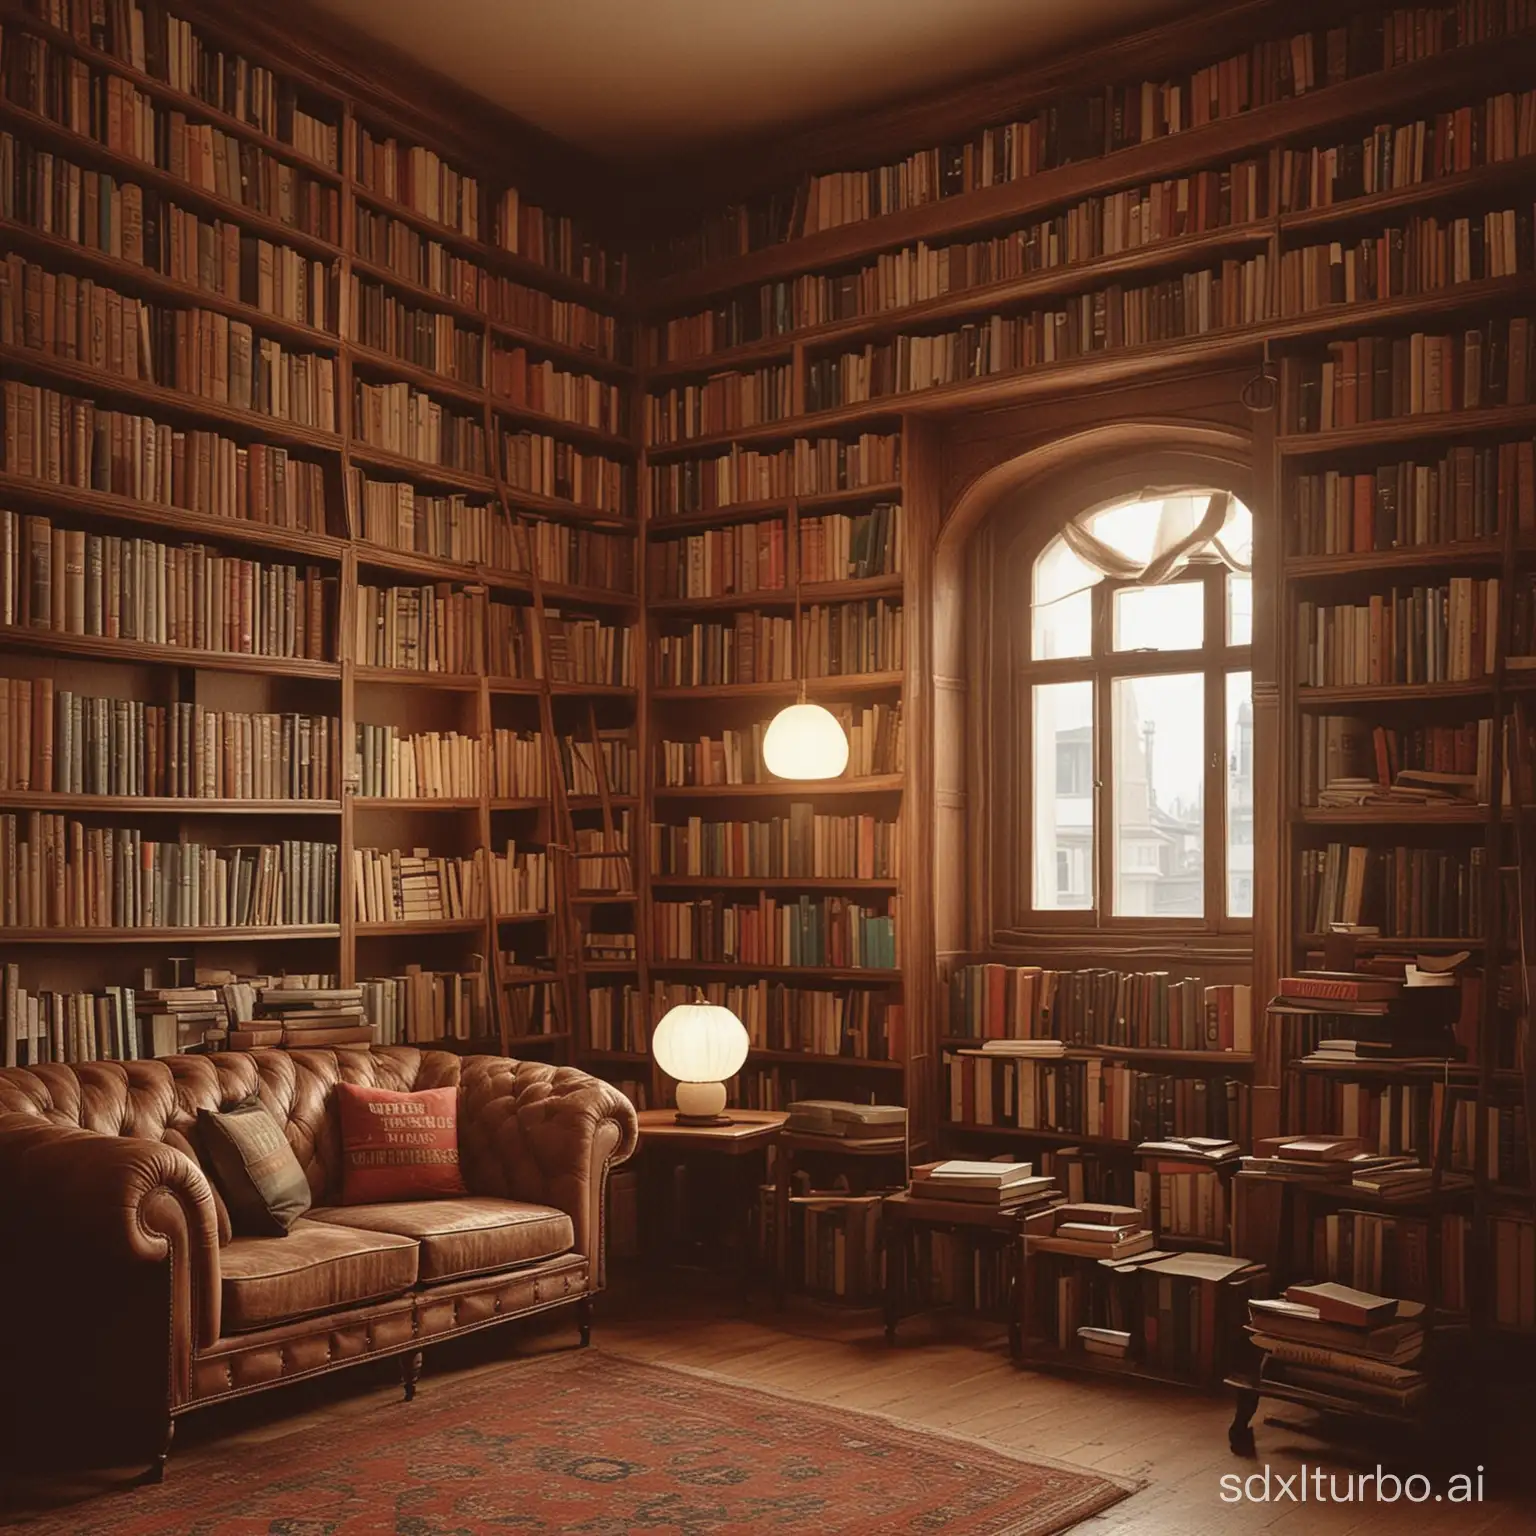 Modern-Literary-Ambiance-with-Bookshelf-Background